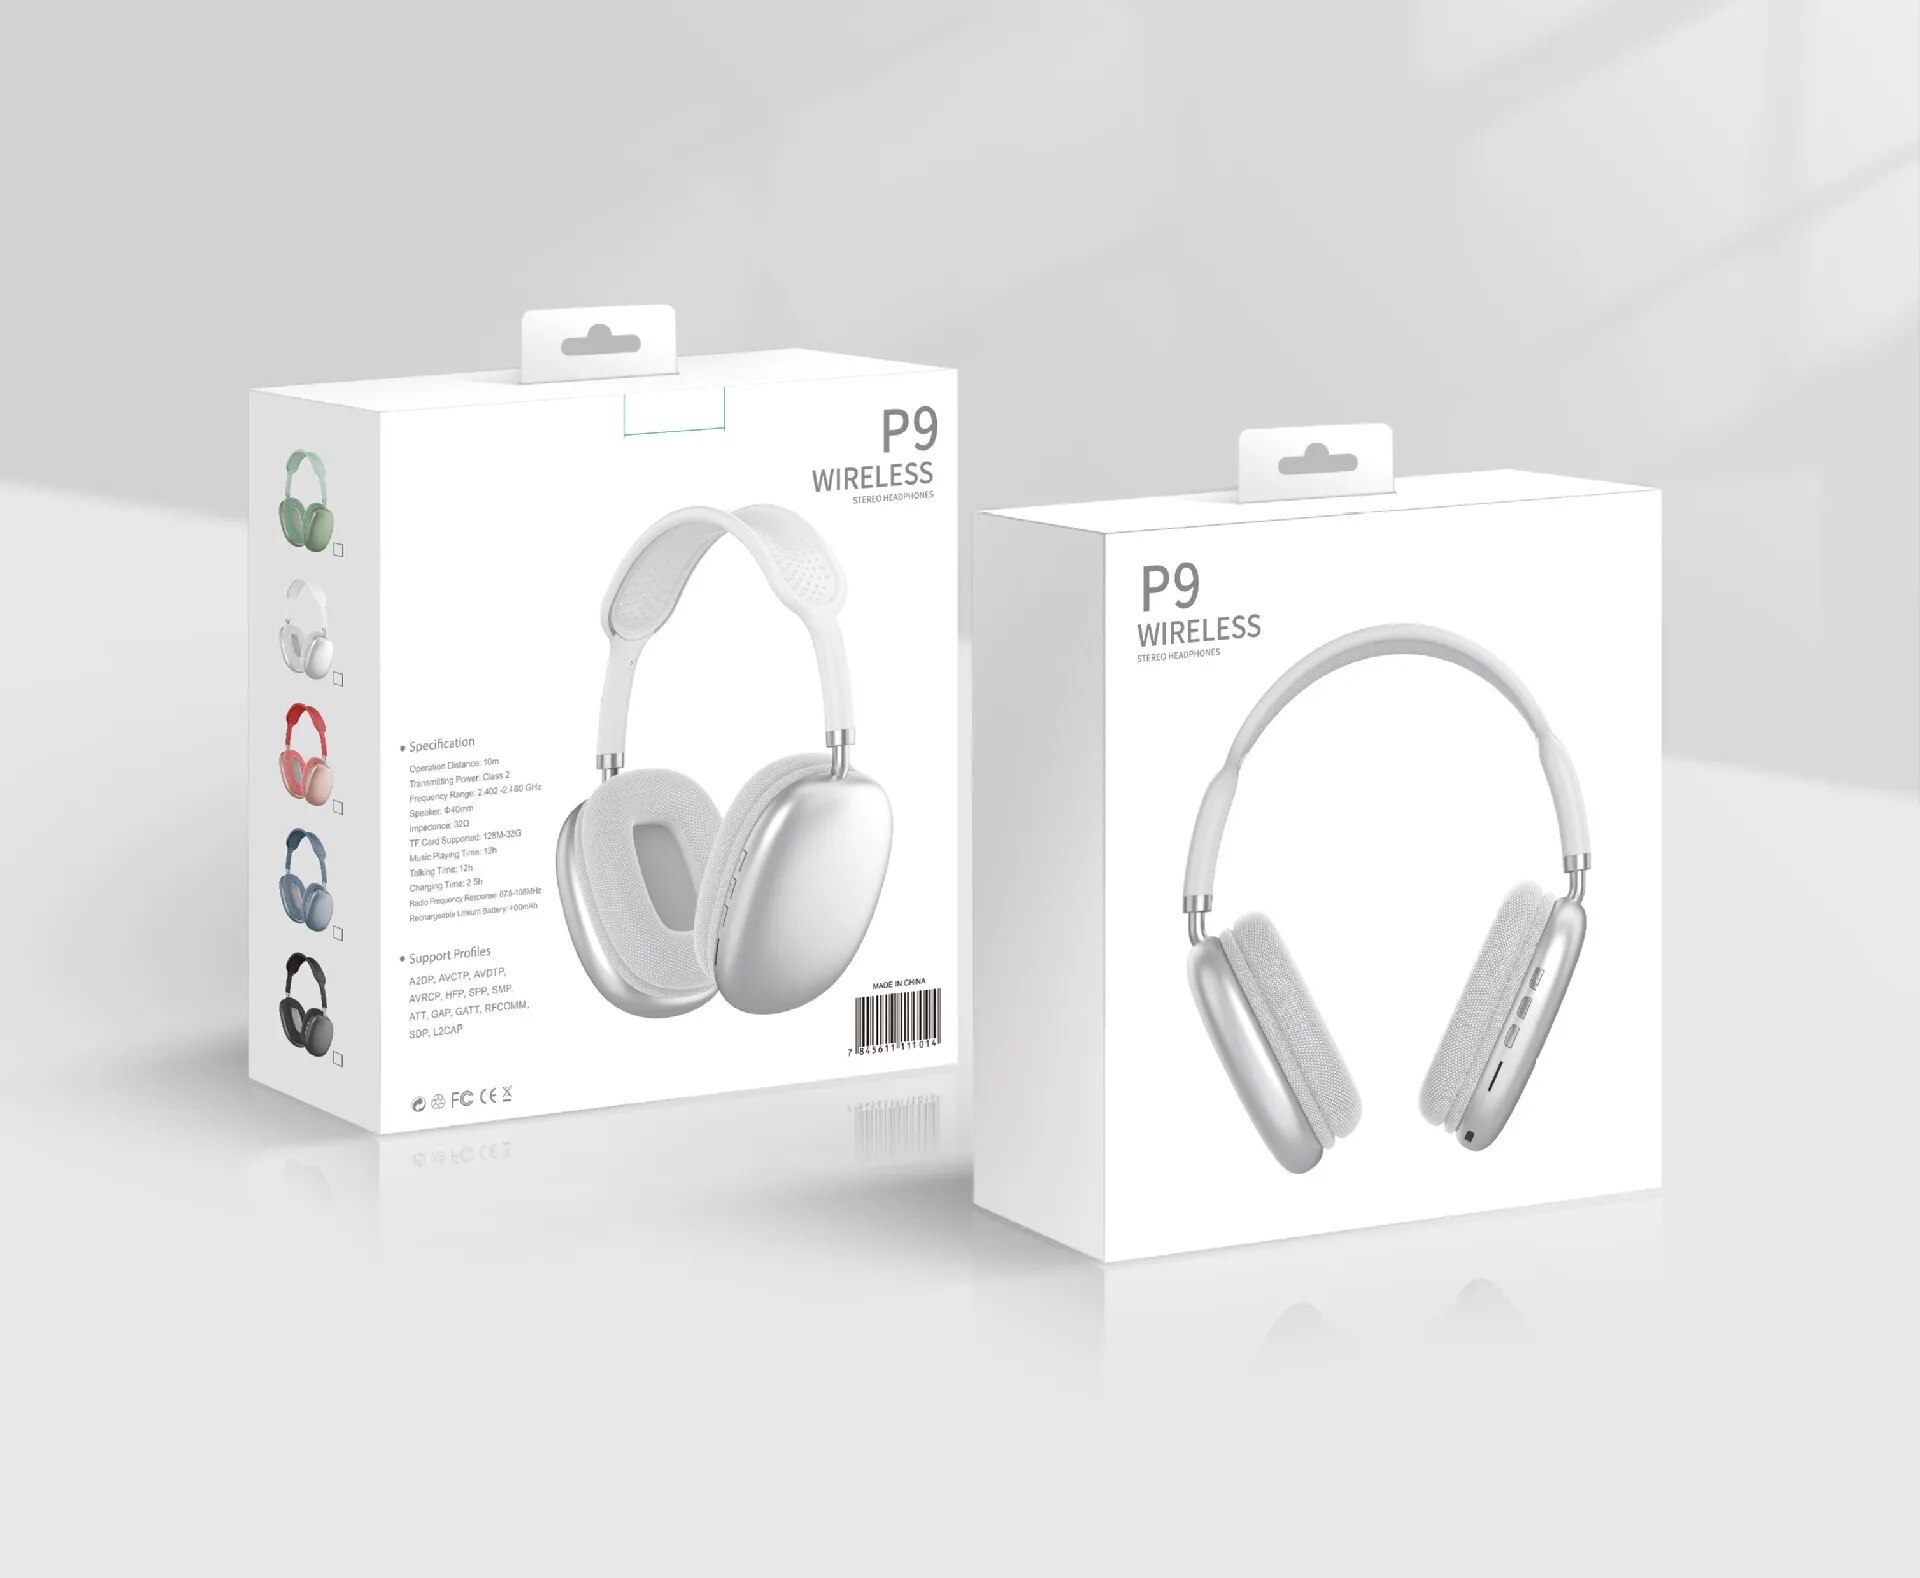 Sfb91624364624869a519bce91860530cs Air Max P9 Pro Wireless Bluetooth Headphones Noise Cancelling Mic